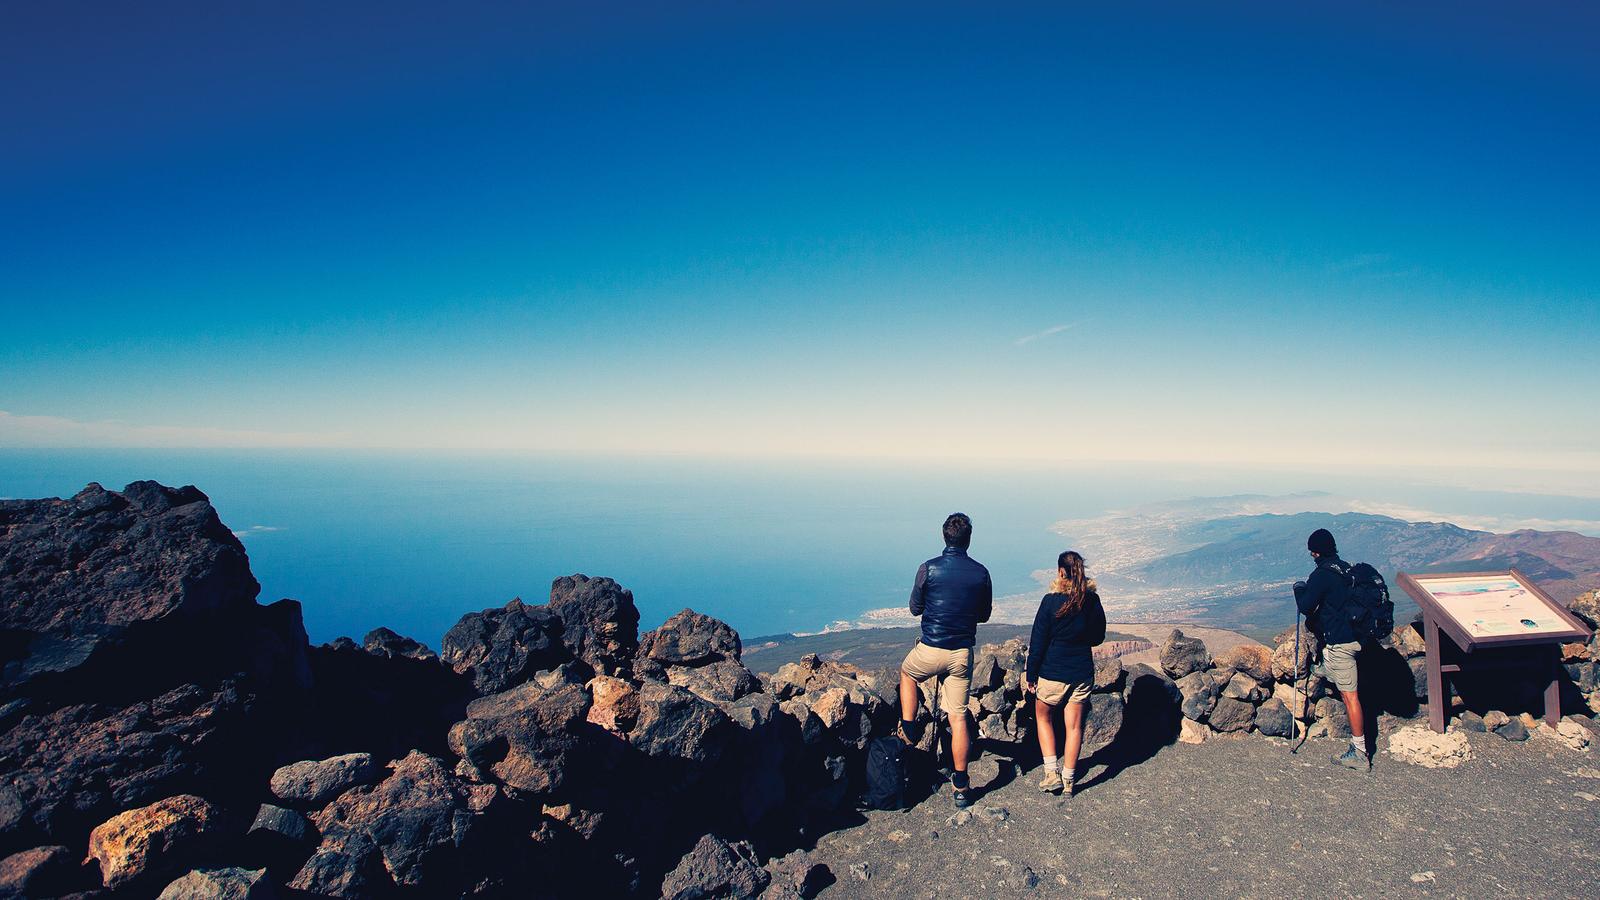 Hiking the Canary Islands: Tenerife, Anaga, and Beyond